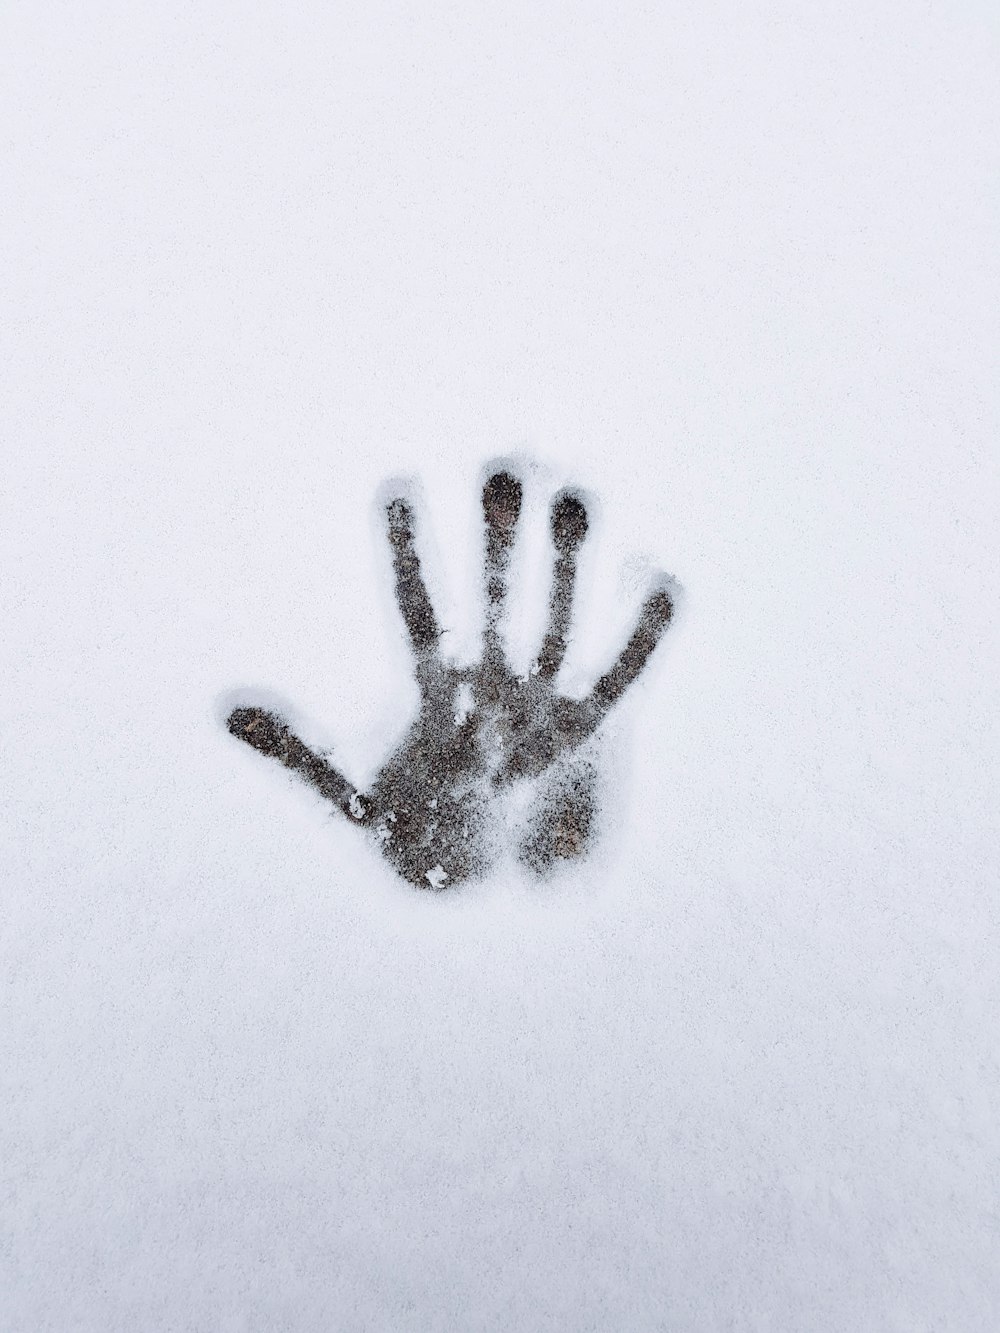 human palm on snow